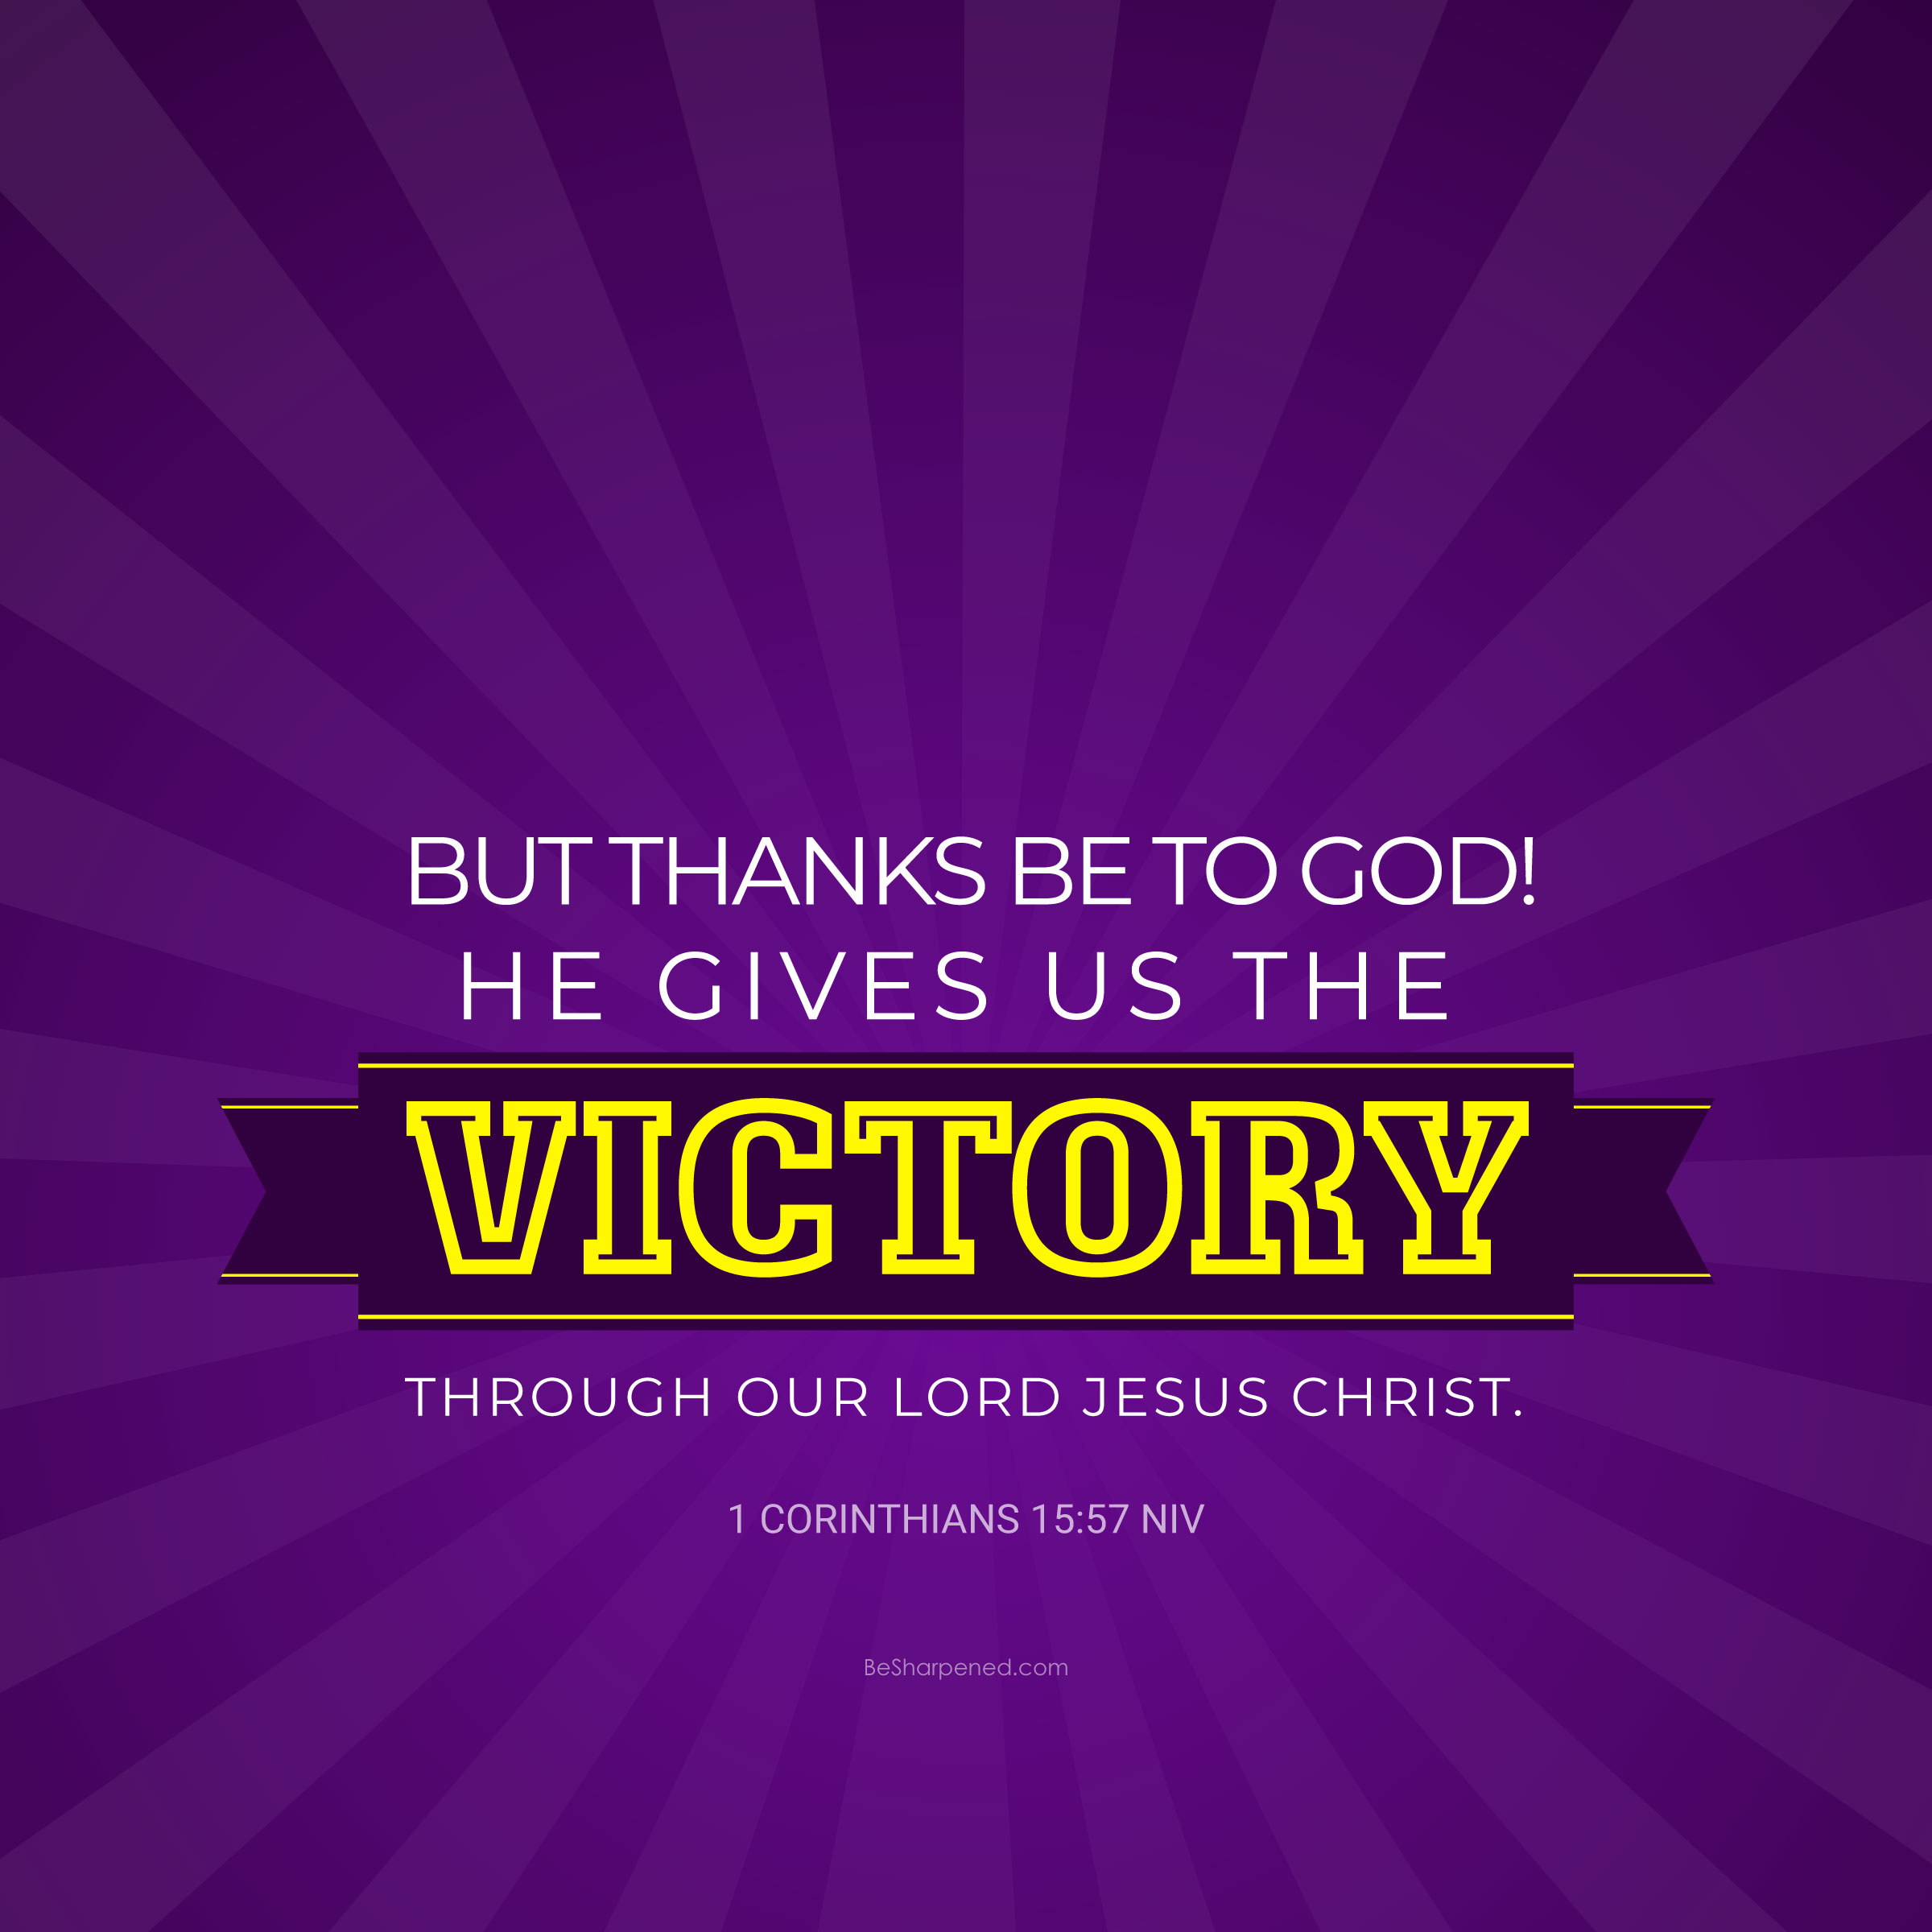 1 Corinthians 15:57 - Victory through Christ